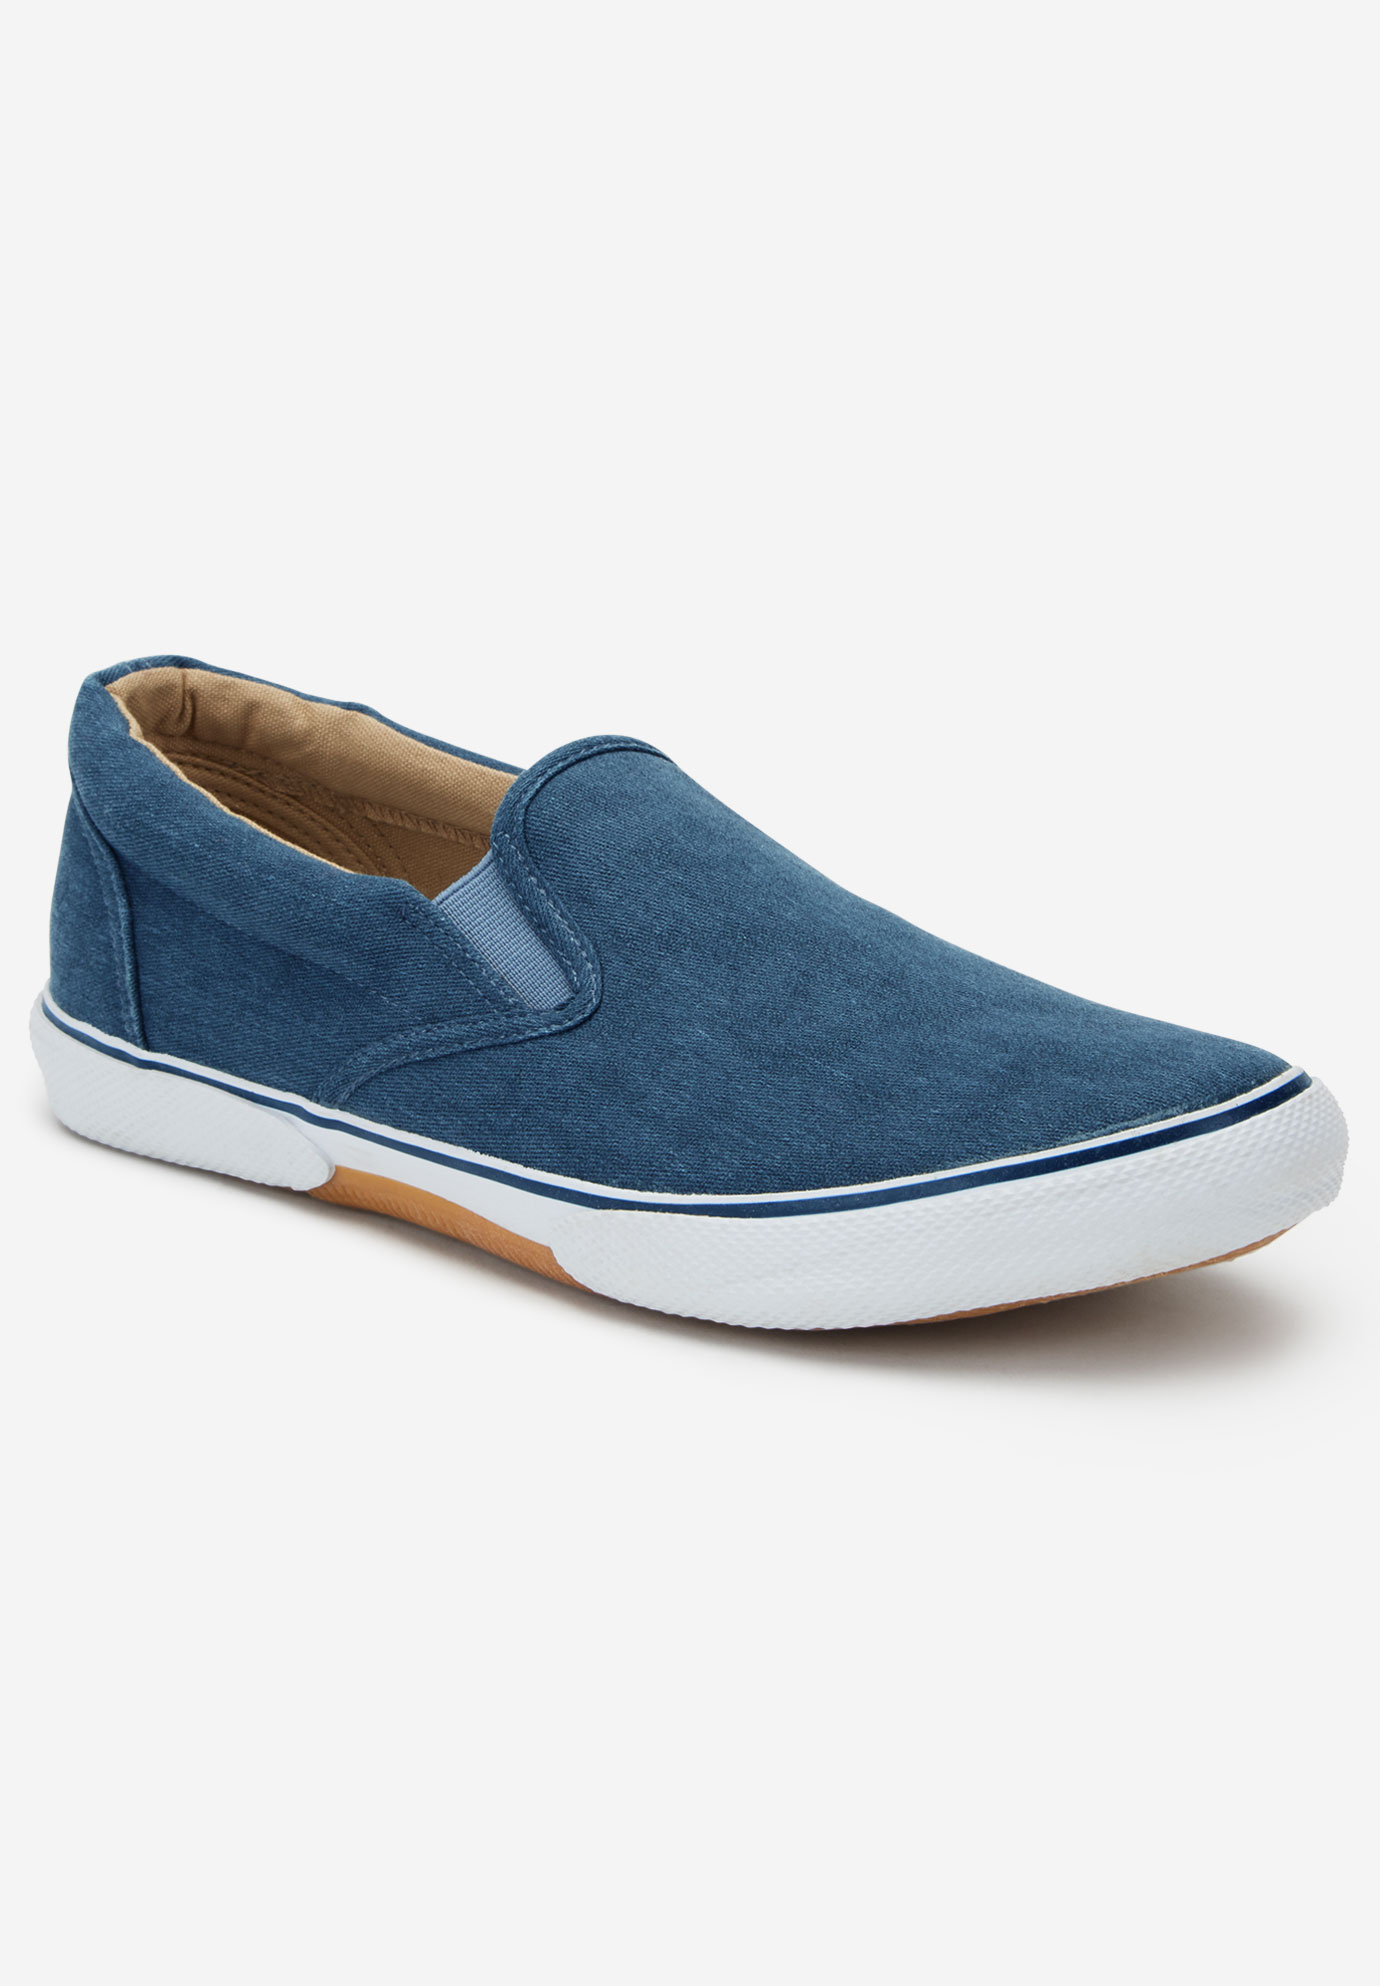 blue canvas slip on shoes